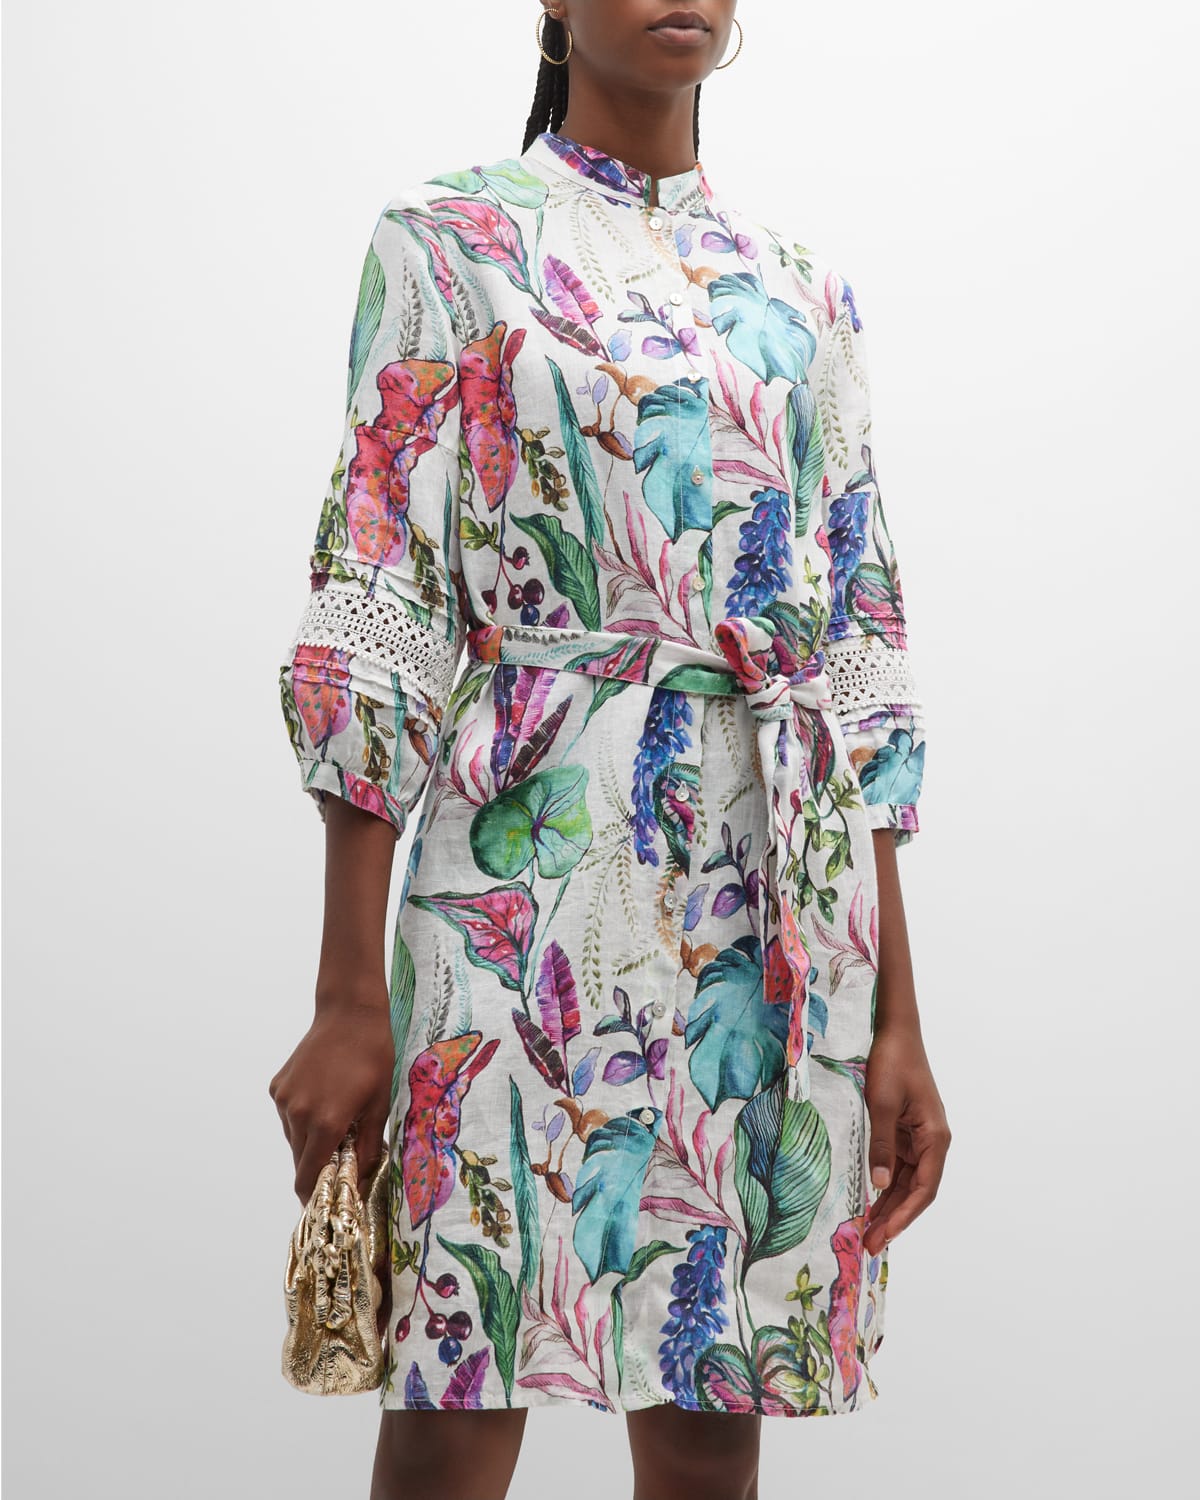 Embroidered Botanical-Print Linen Dress